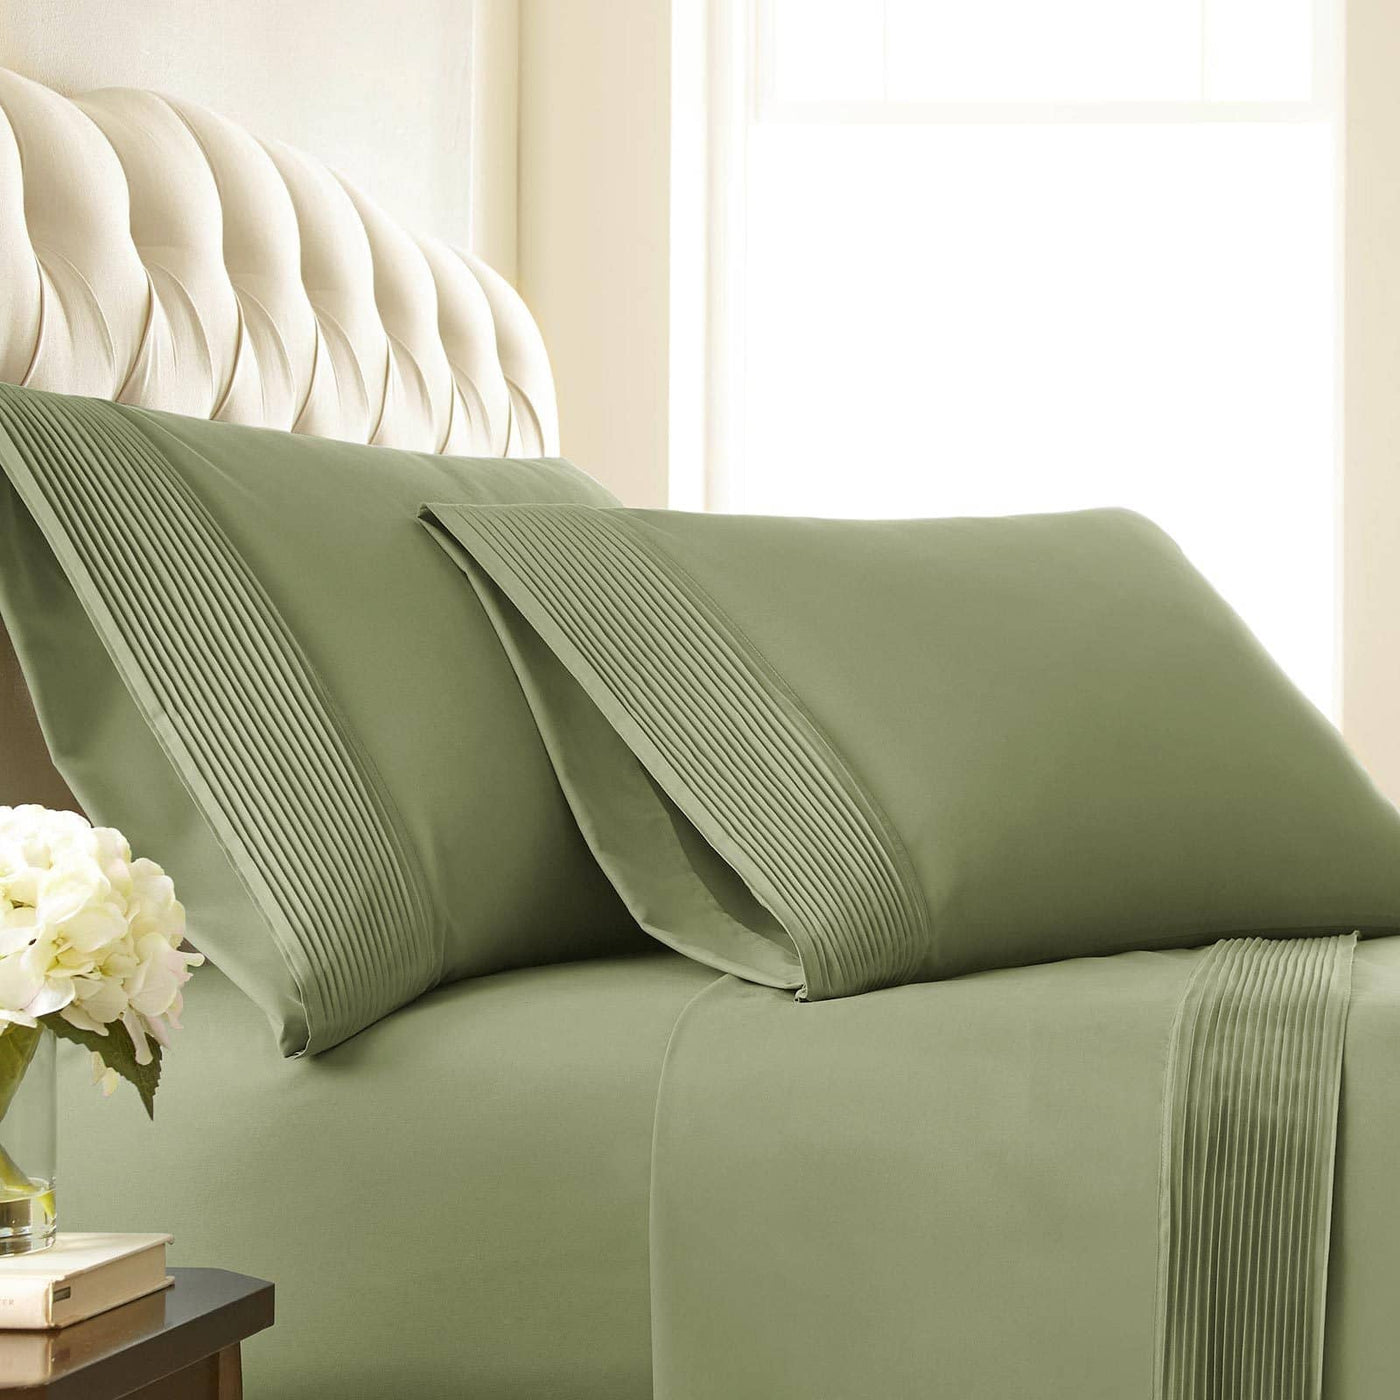 Vilano Springs Pleated Hem Pillow Cases in Sage Green#color_vilano-sage-green